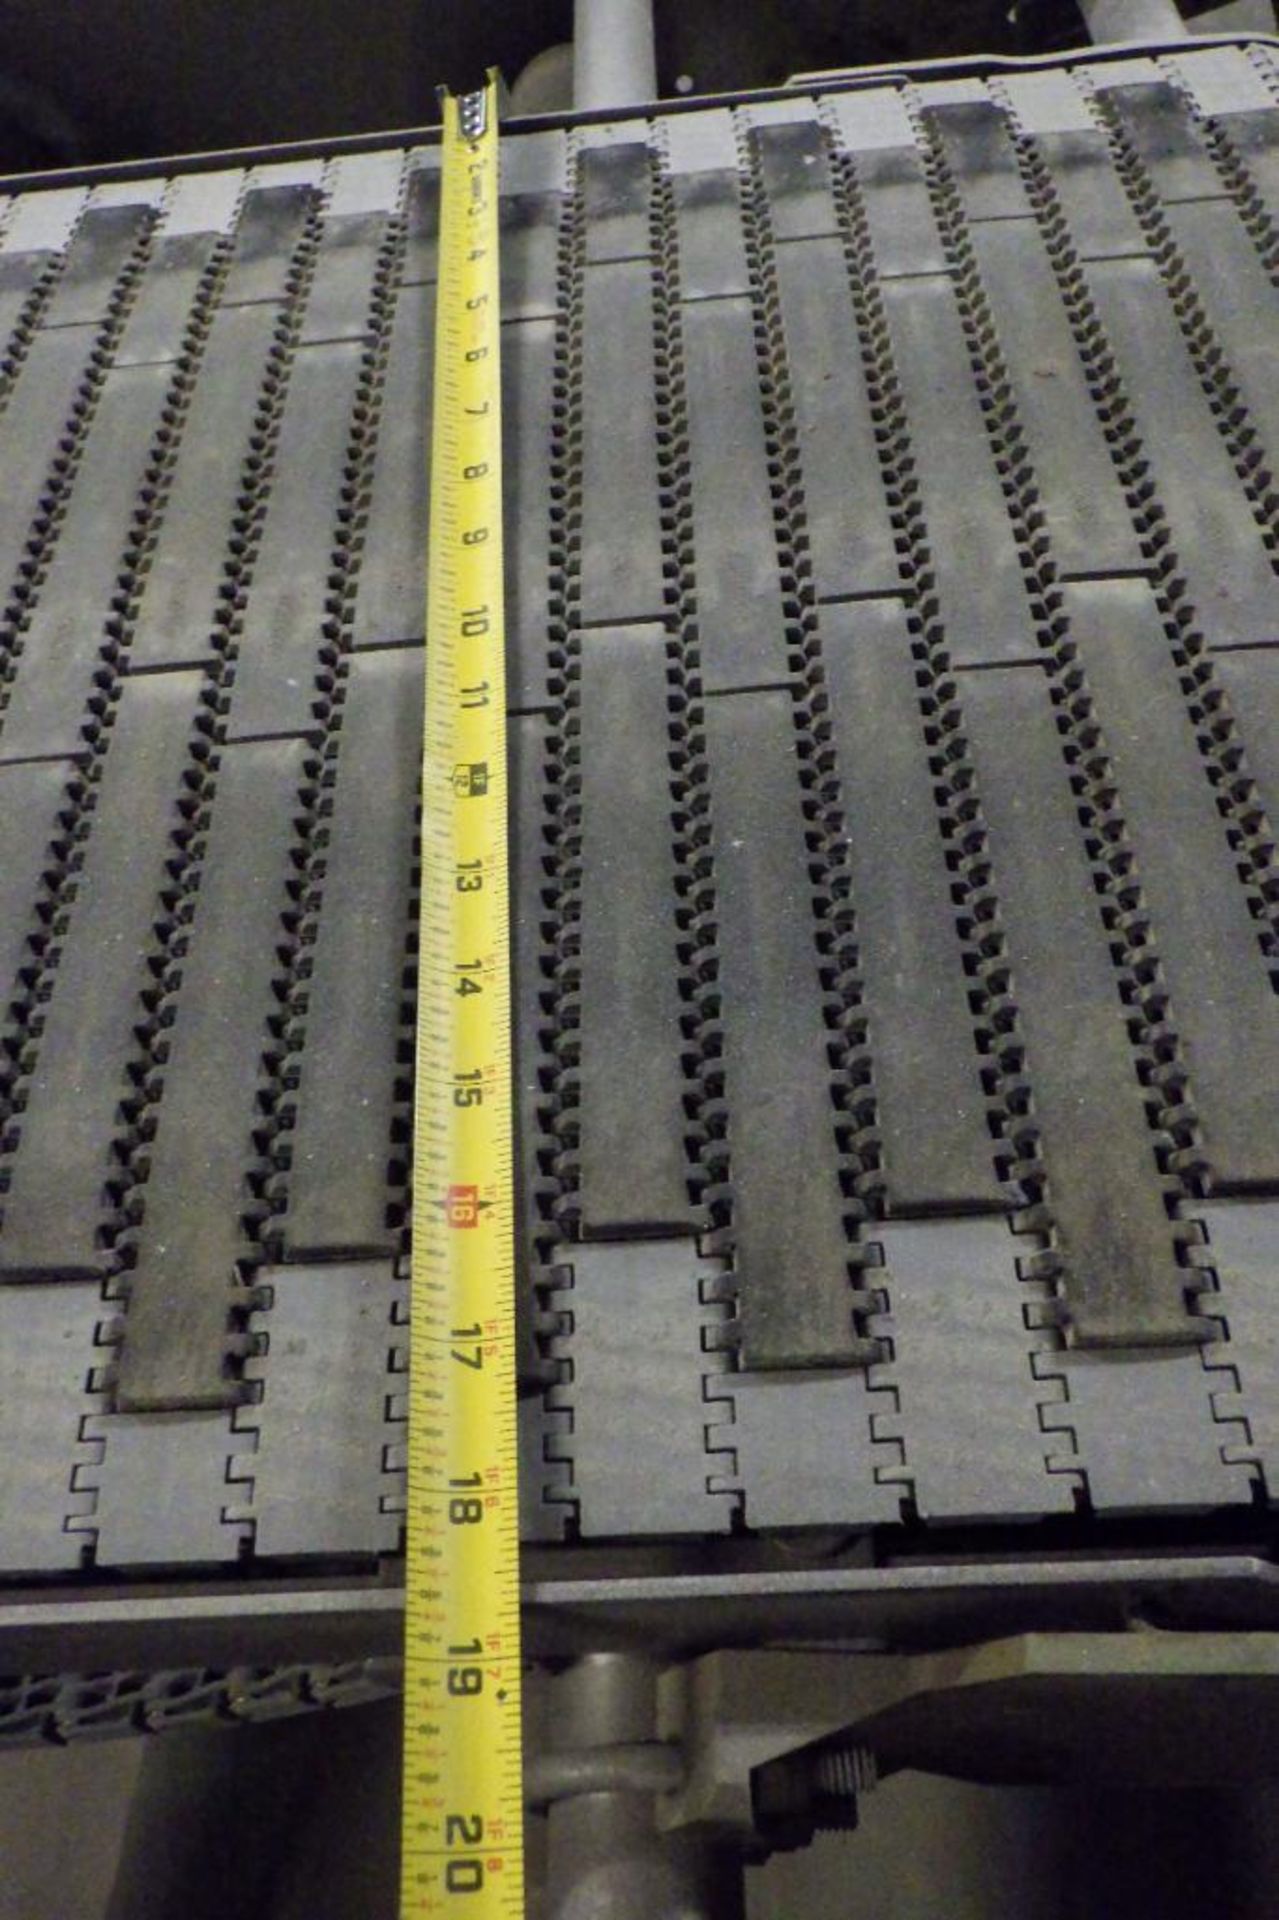 Stewart systems overhead conveyor - Image 27 of 29